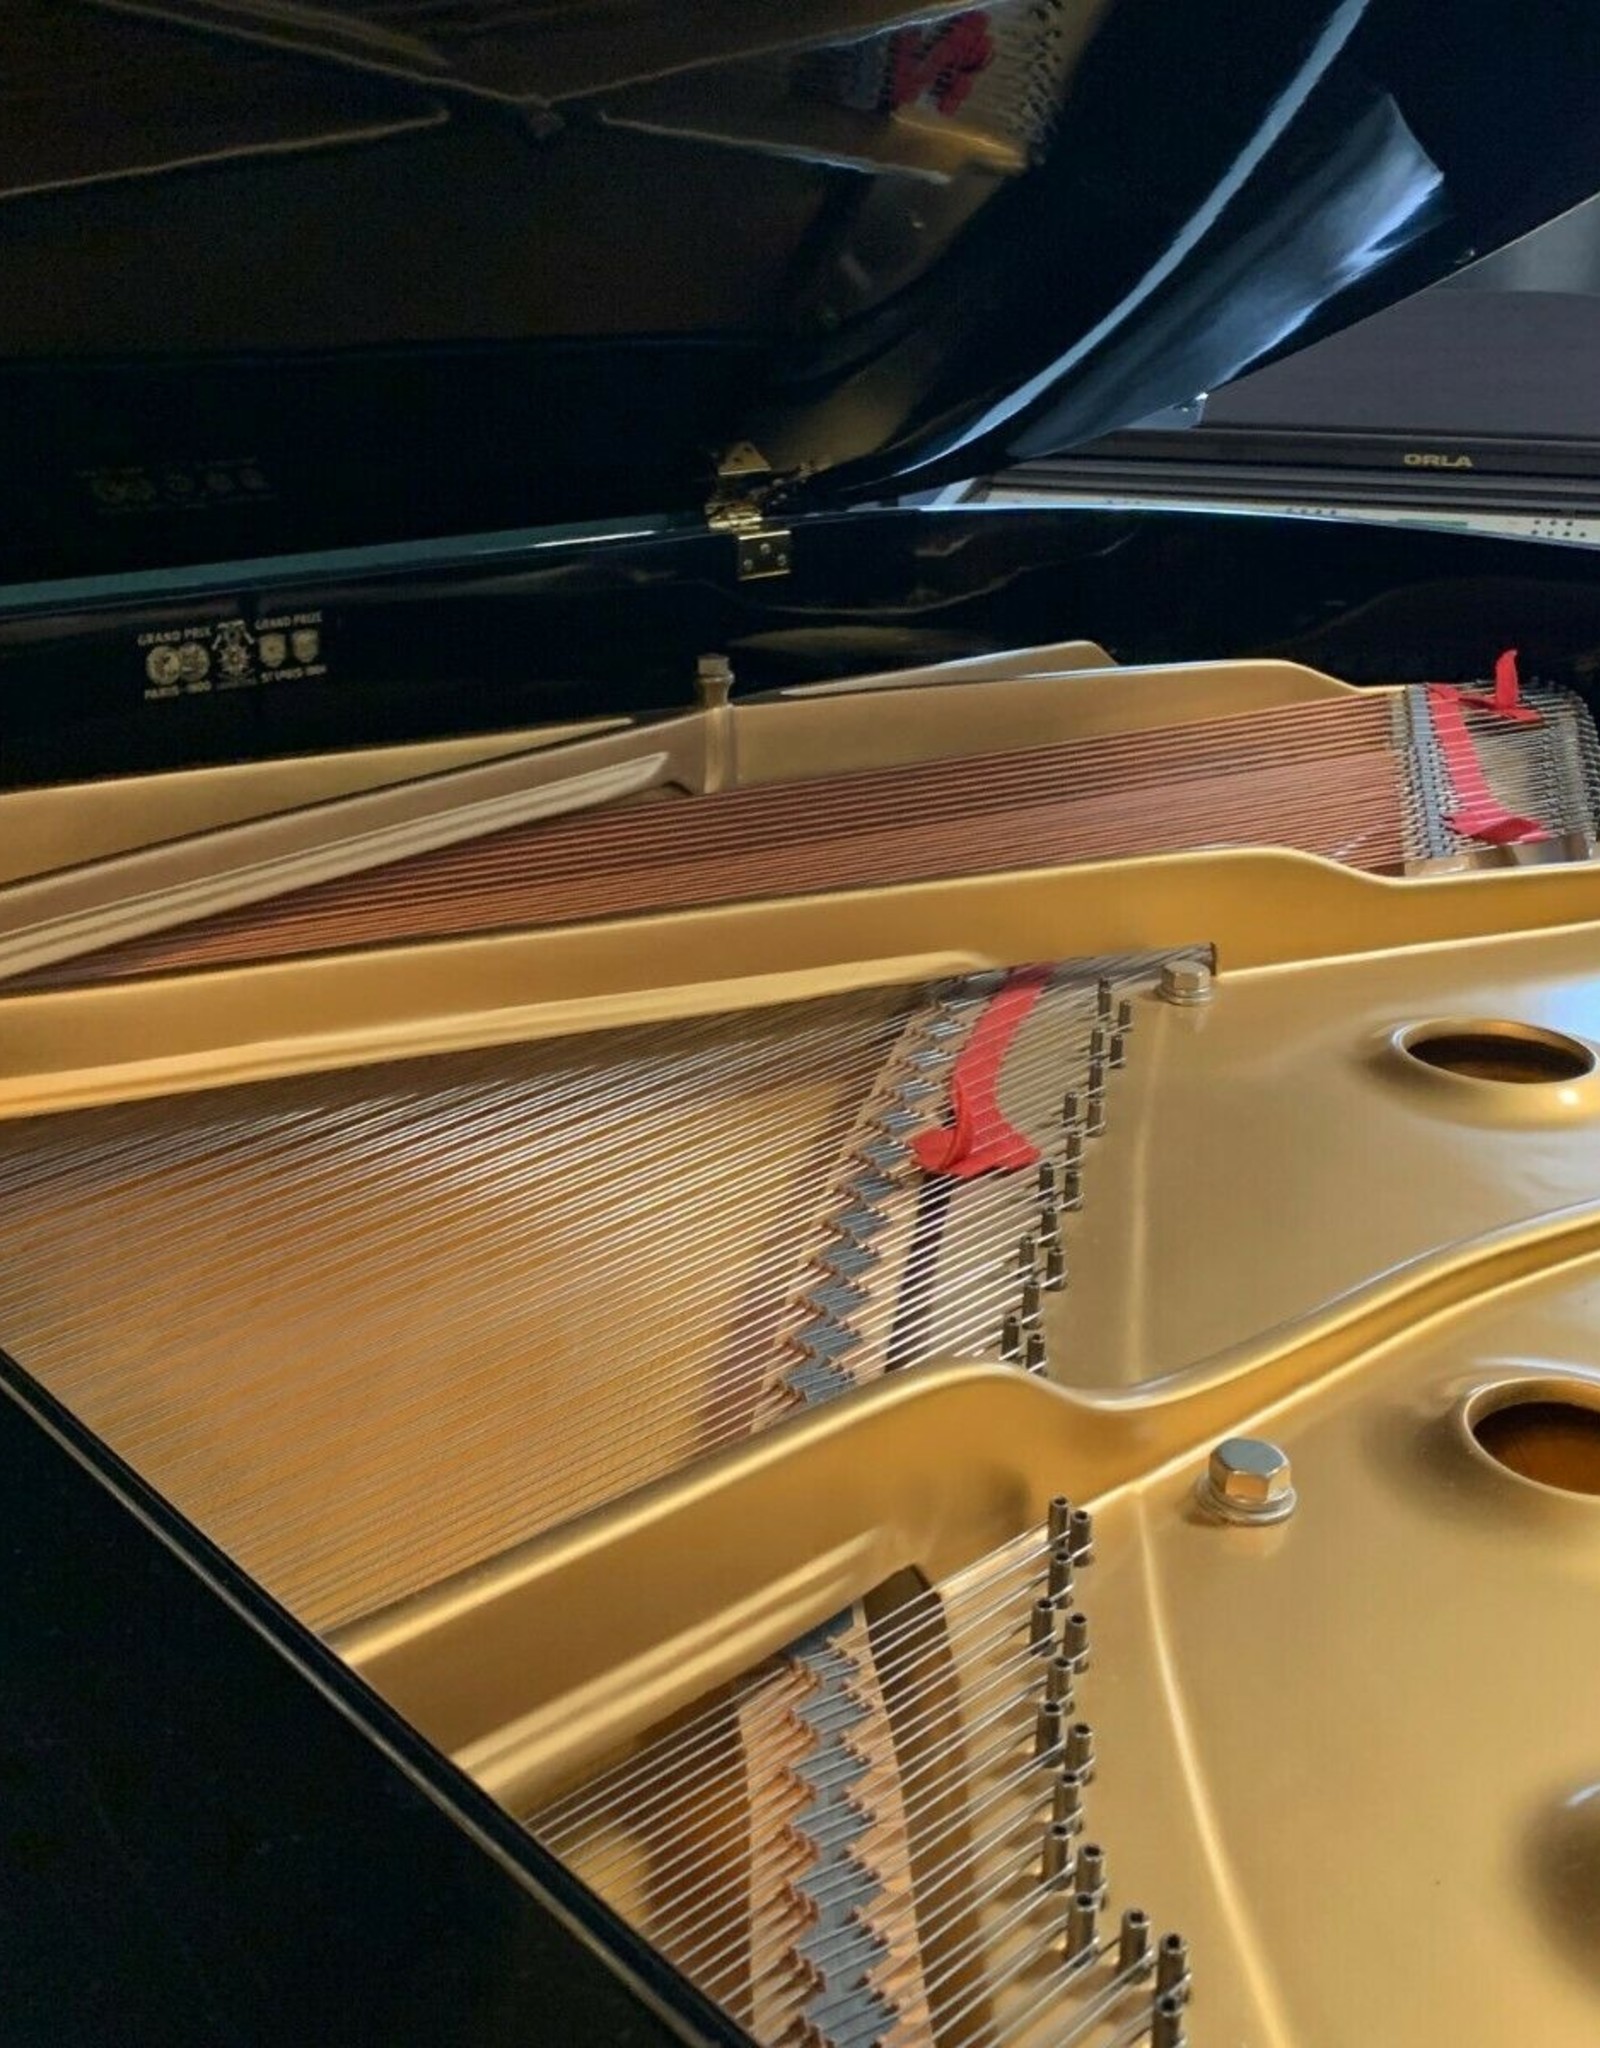 Baldwin Baldwin “Model L” 6’3” Grand Piano (High Polished Ebony) (pre-owned)